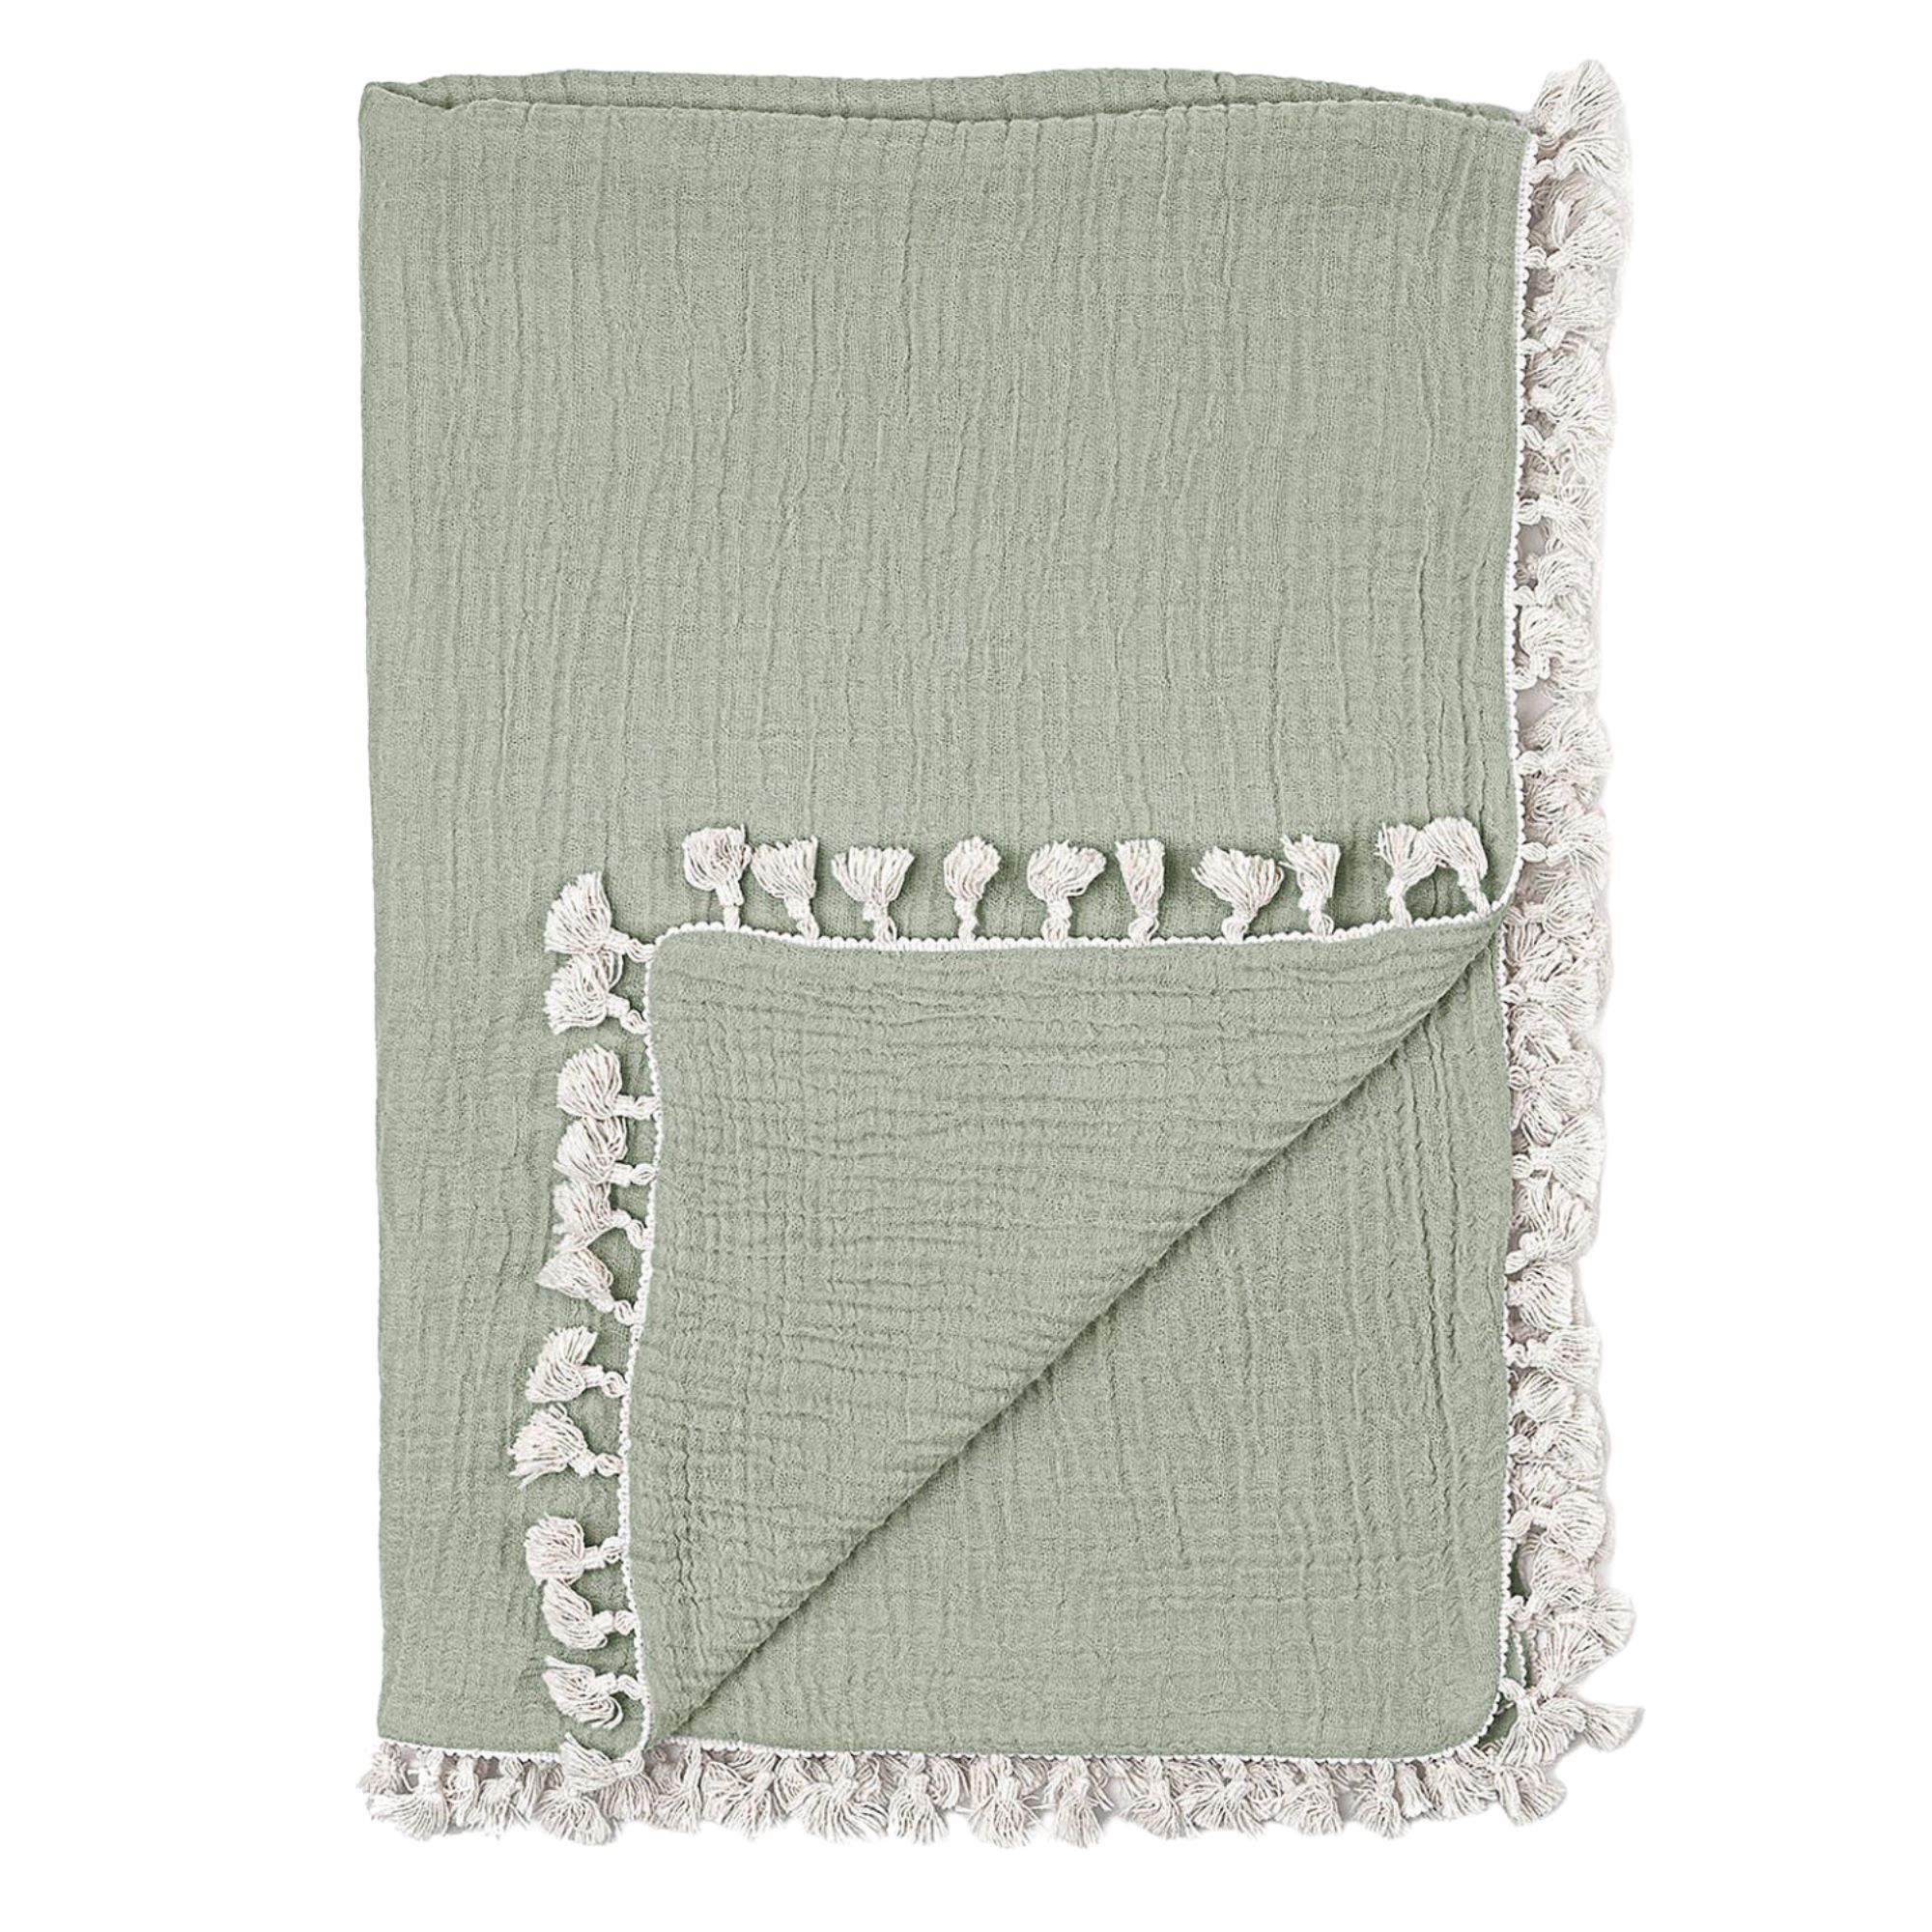 Green muslin blanket on white background